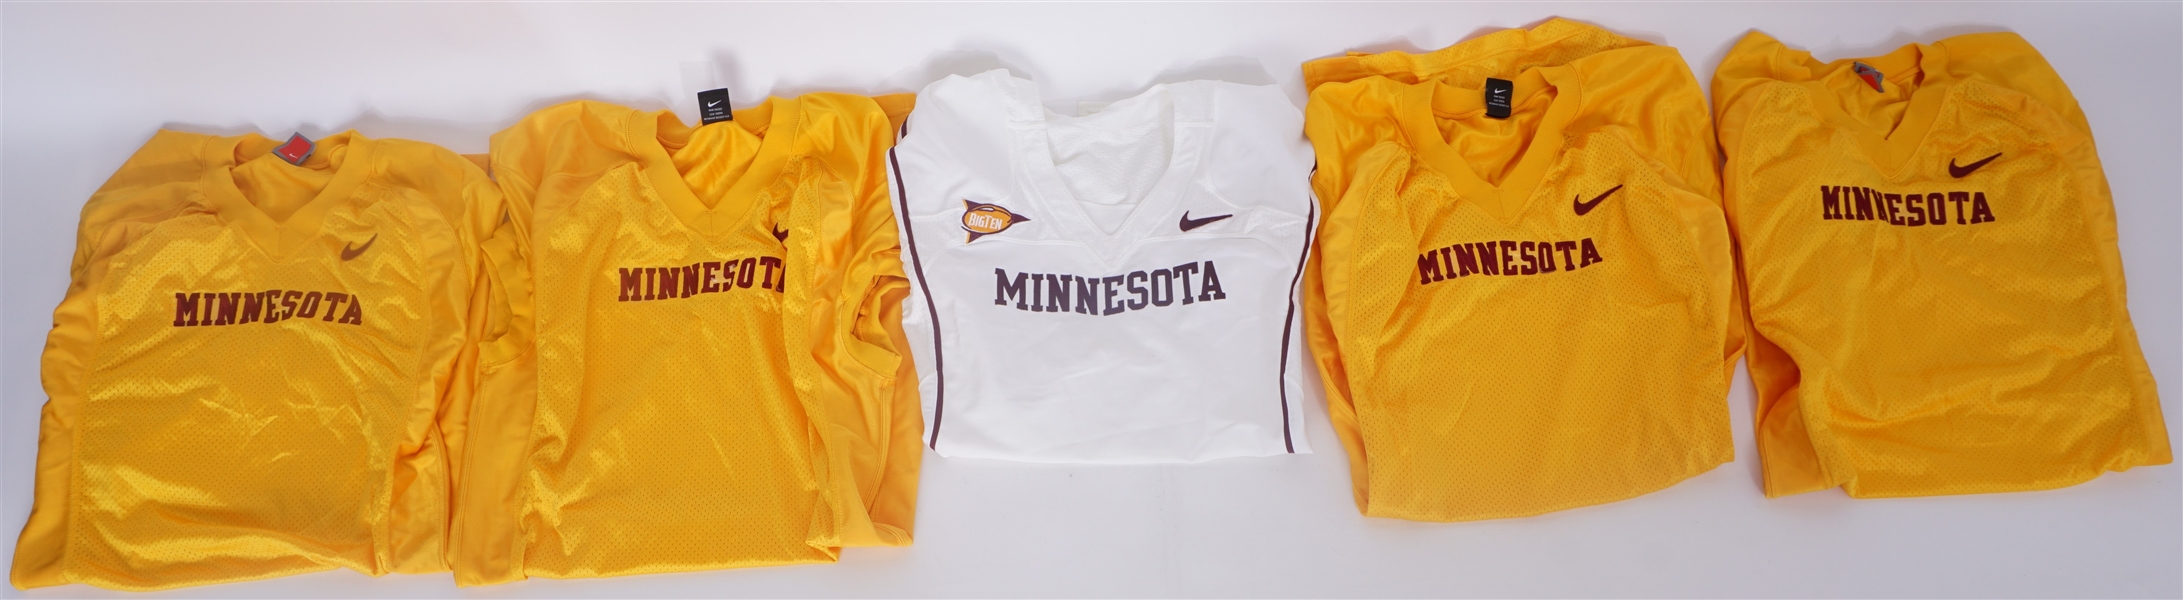 Lot of 5 Minnesota Gophers Issued Football Jerseys